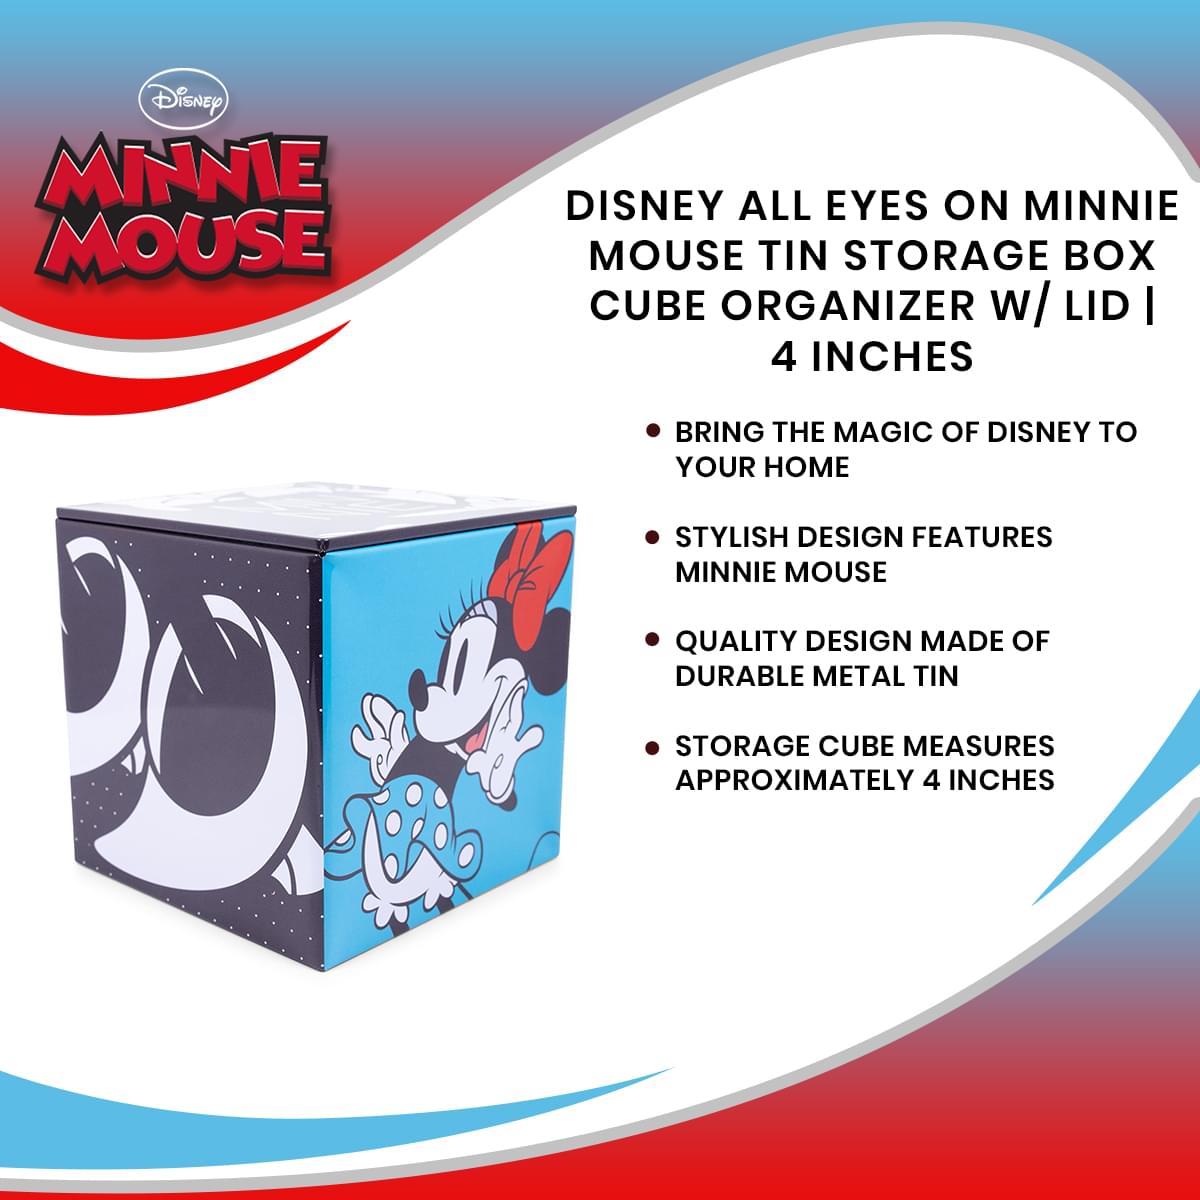 Disney All Eyes on Minnie Mouse Tin Storage Box Cube Organizer w/ Lid | 4 Inches